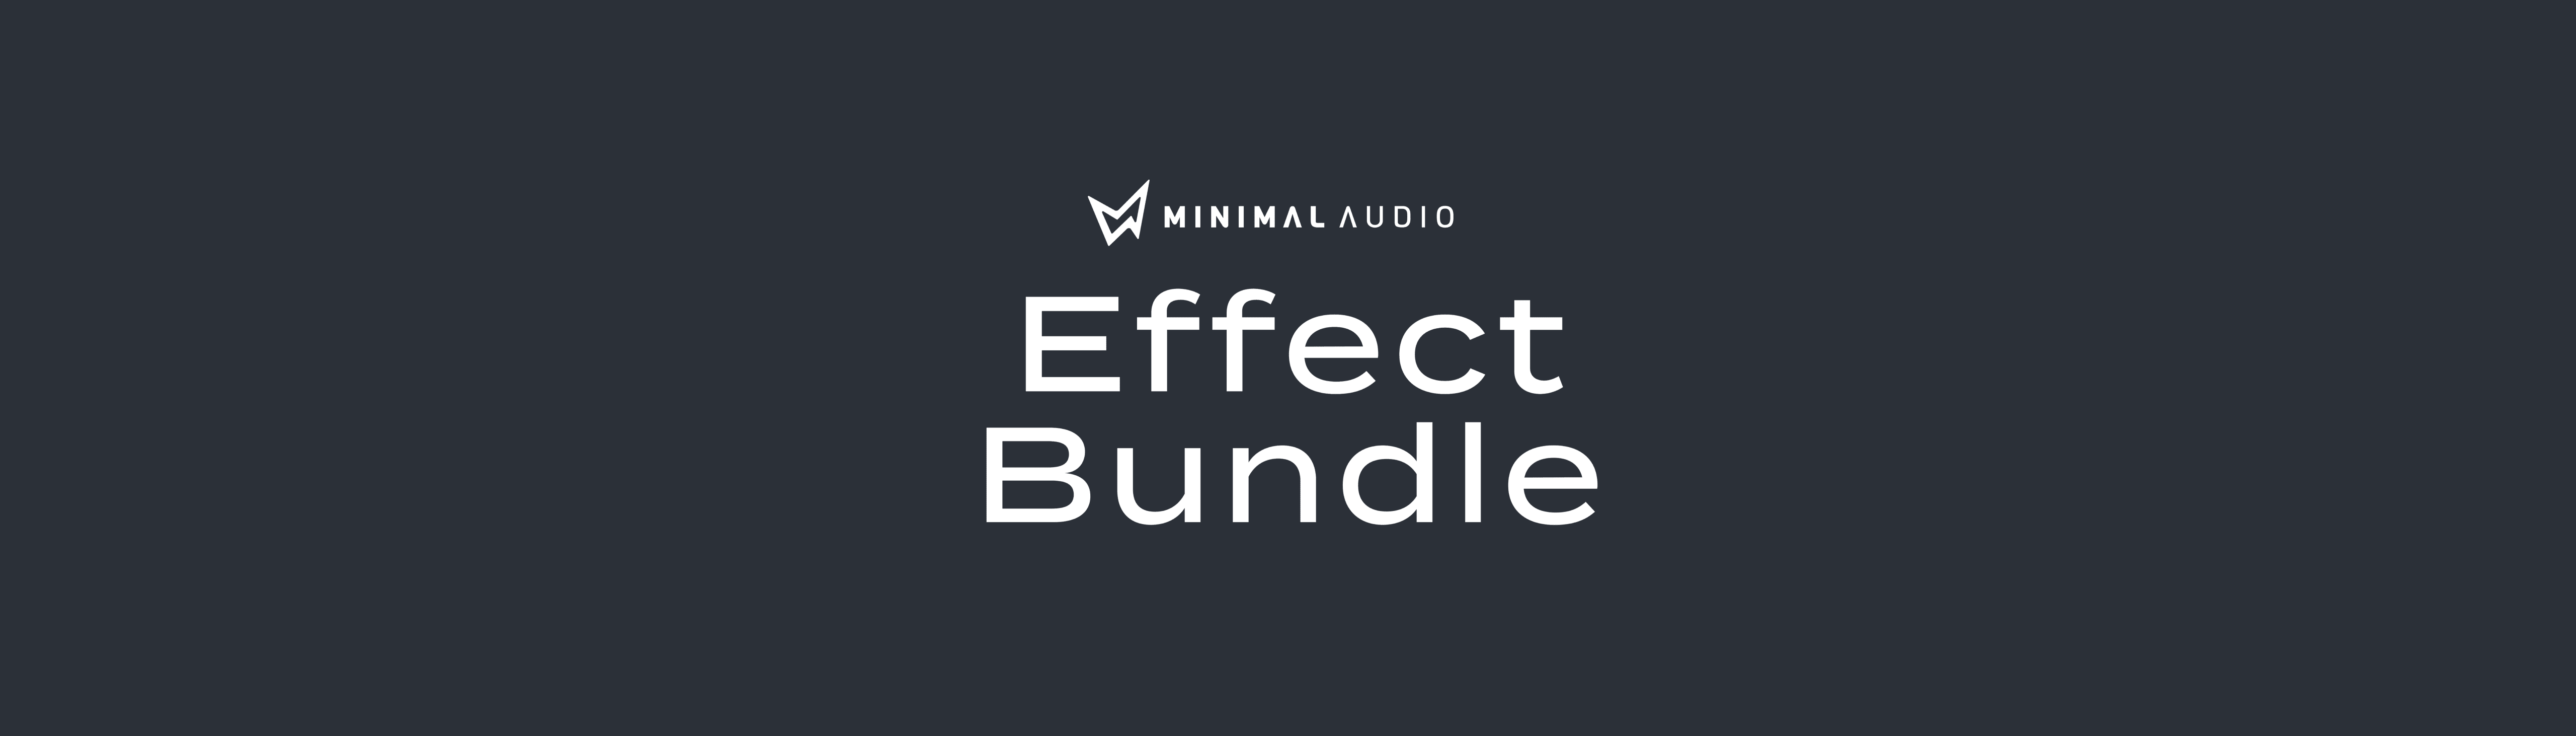 Minimal Audio Effect Bundle Rent-to-Own